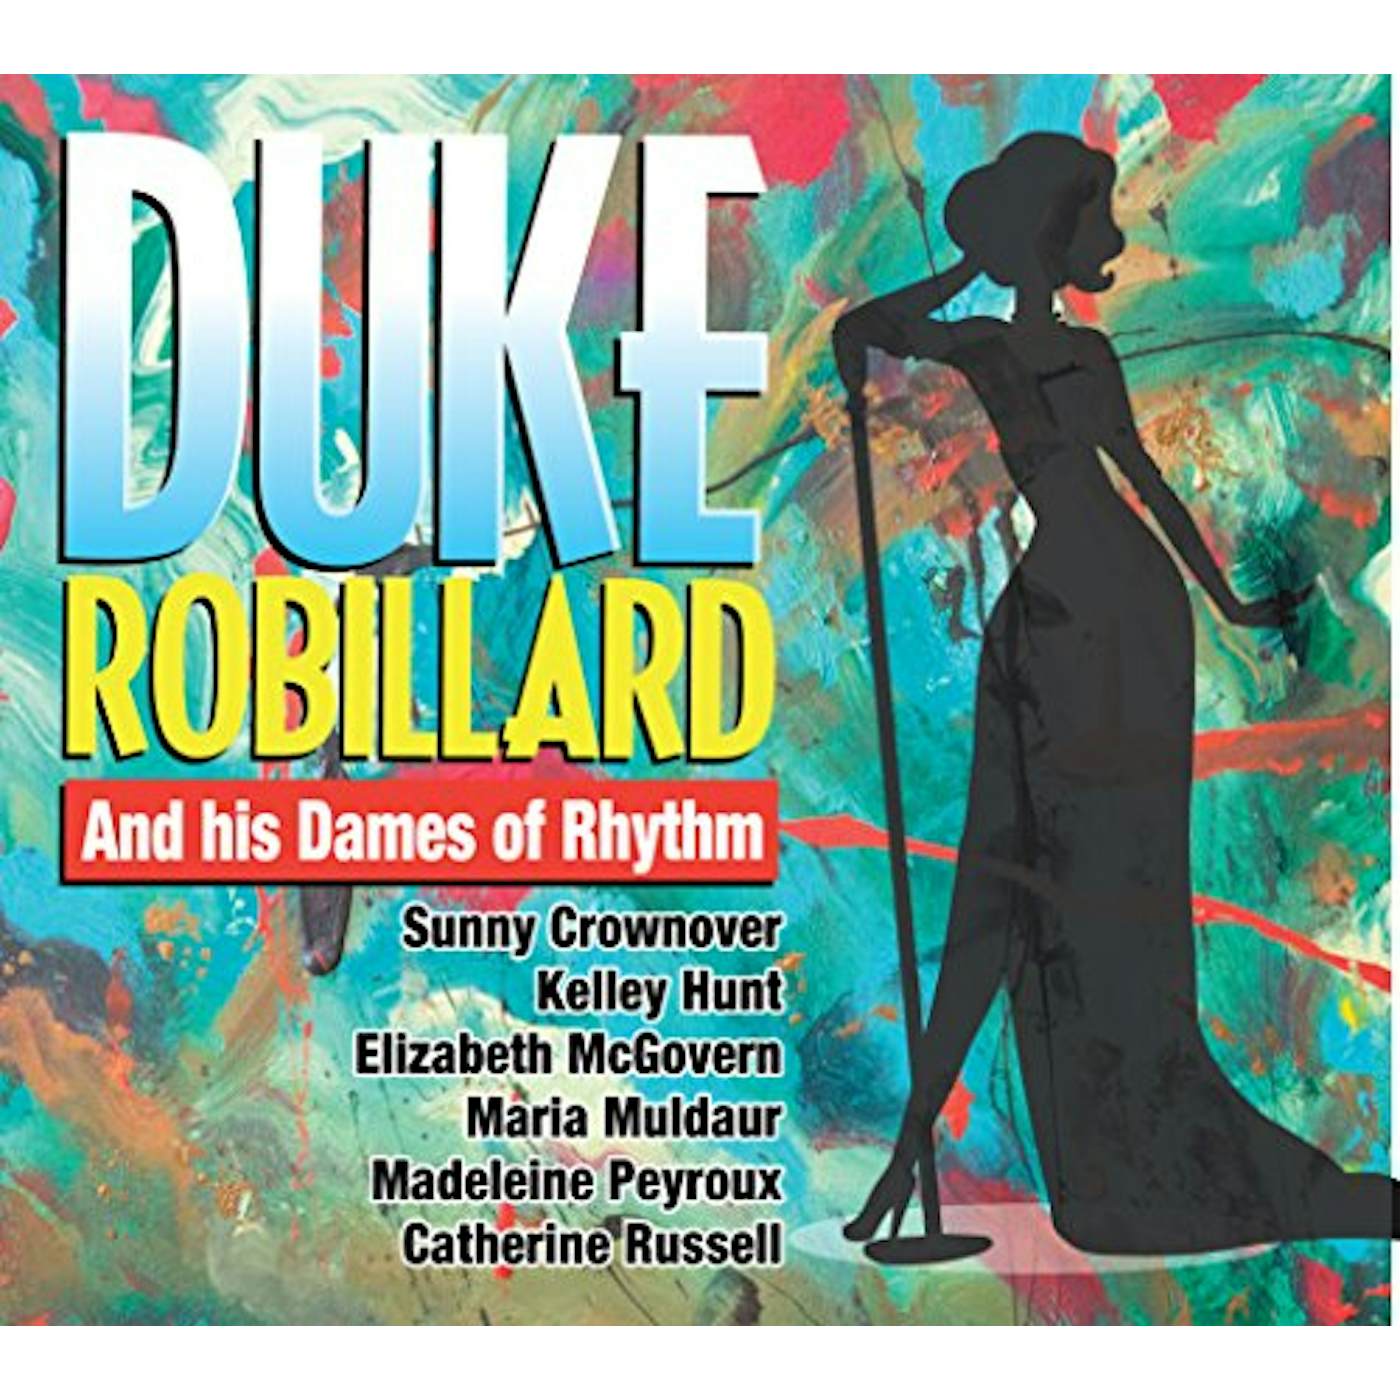 DUKE ROBILLARD AND HIS DAMES OF RHYTHM CD